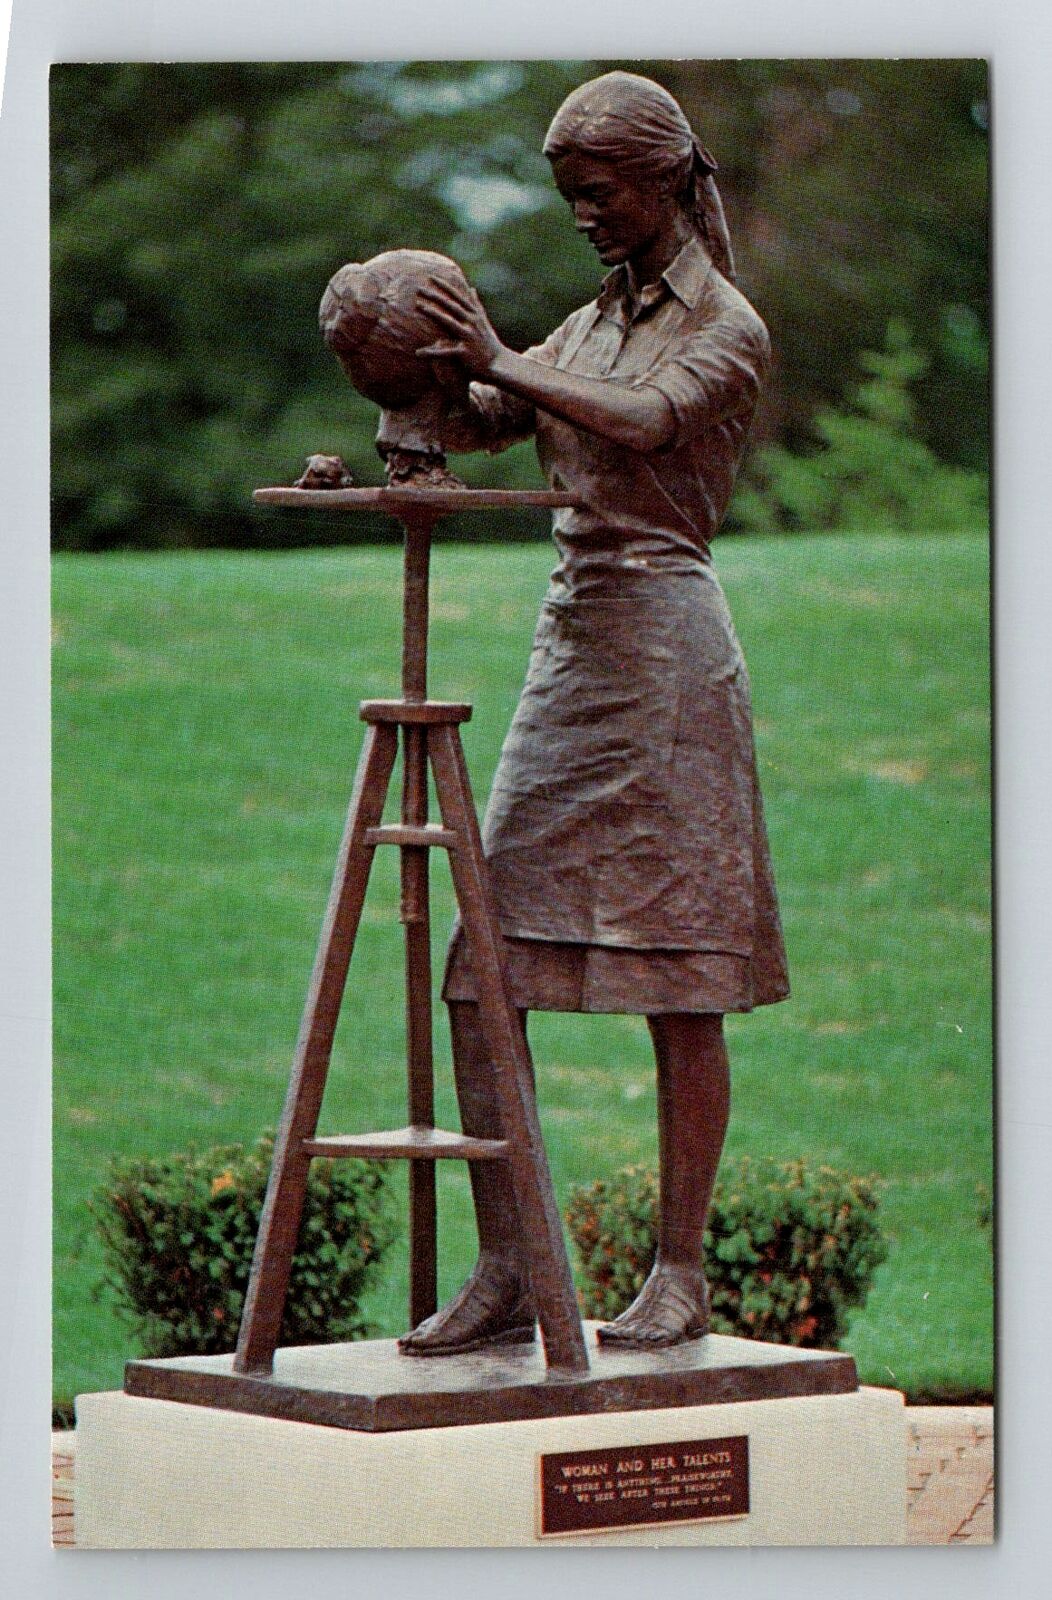 Nauvoo IL-Illinois, Woman and Her Talents Monument, Vintage Souvenir Postcard